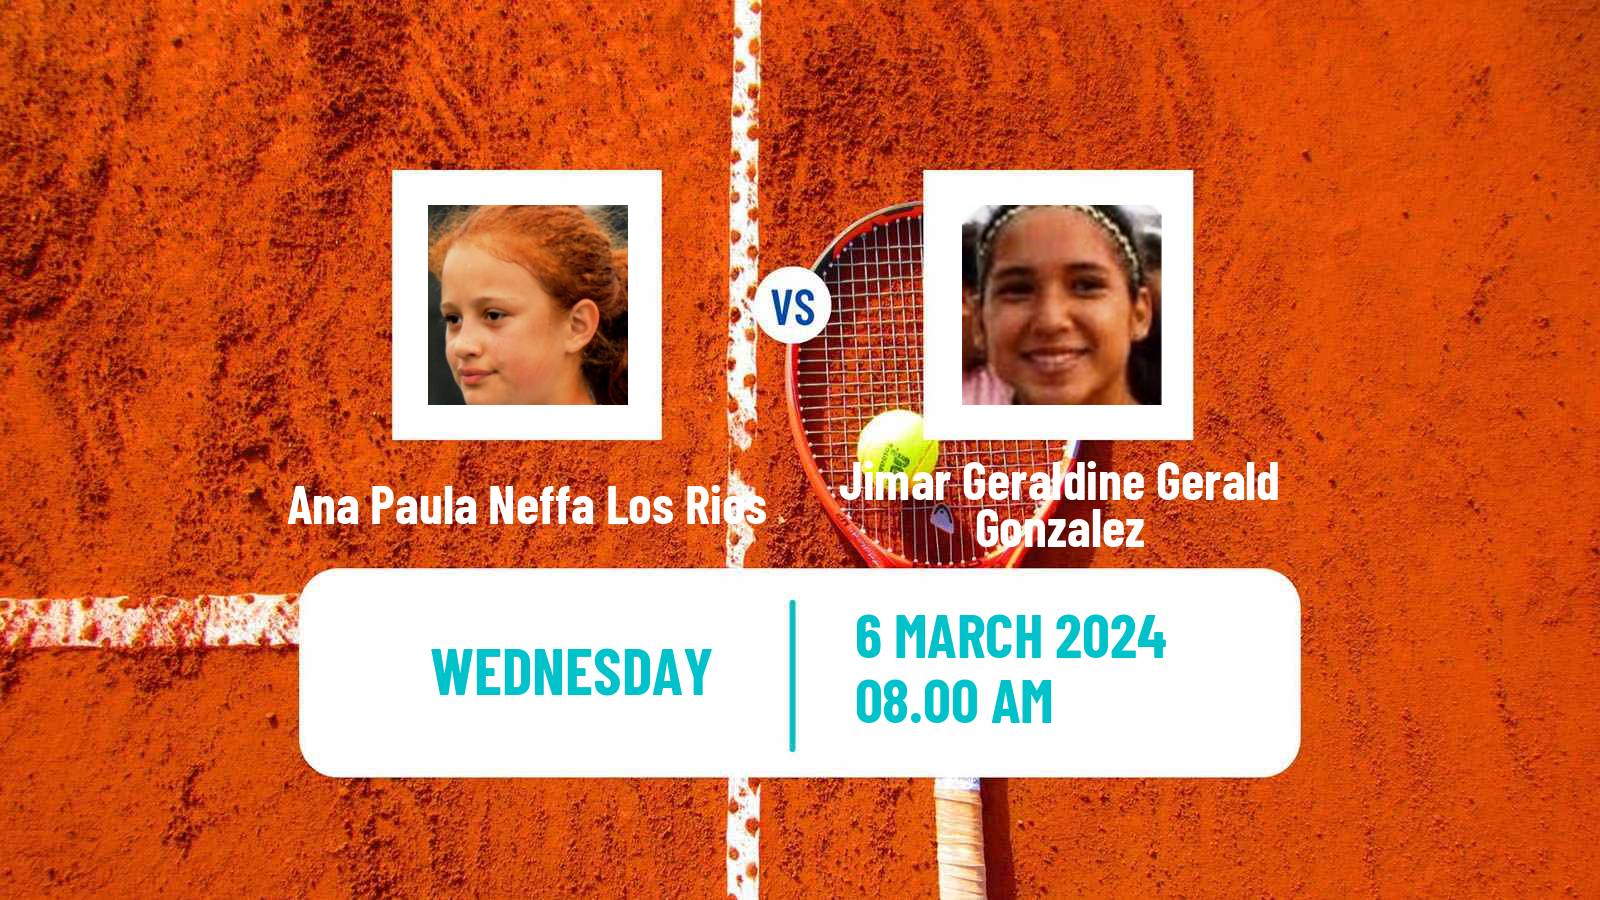 Tennis ITF W15 Cordoba Women Ana Paula Neffa Los Rios - Jimar Geraldine Gerald Gonzalez